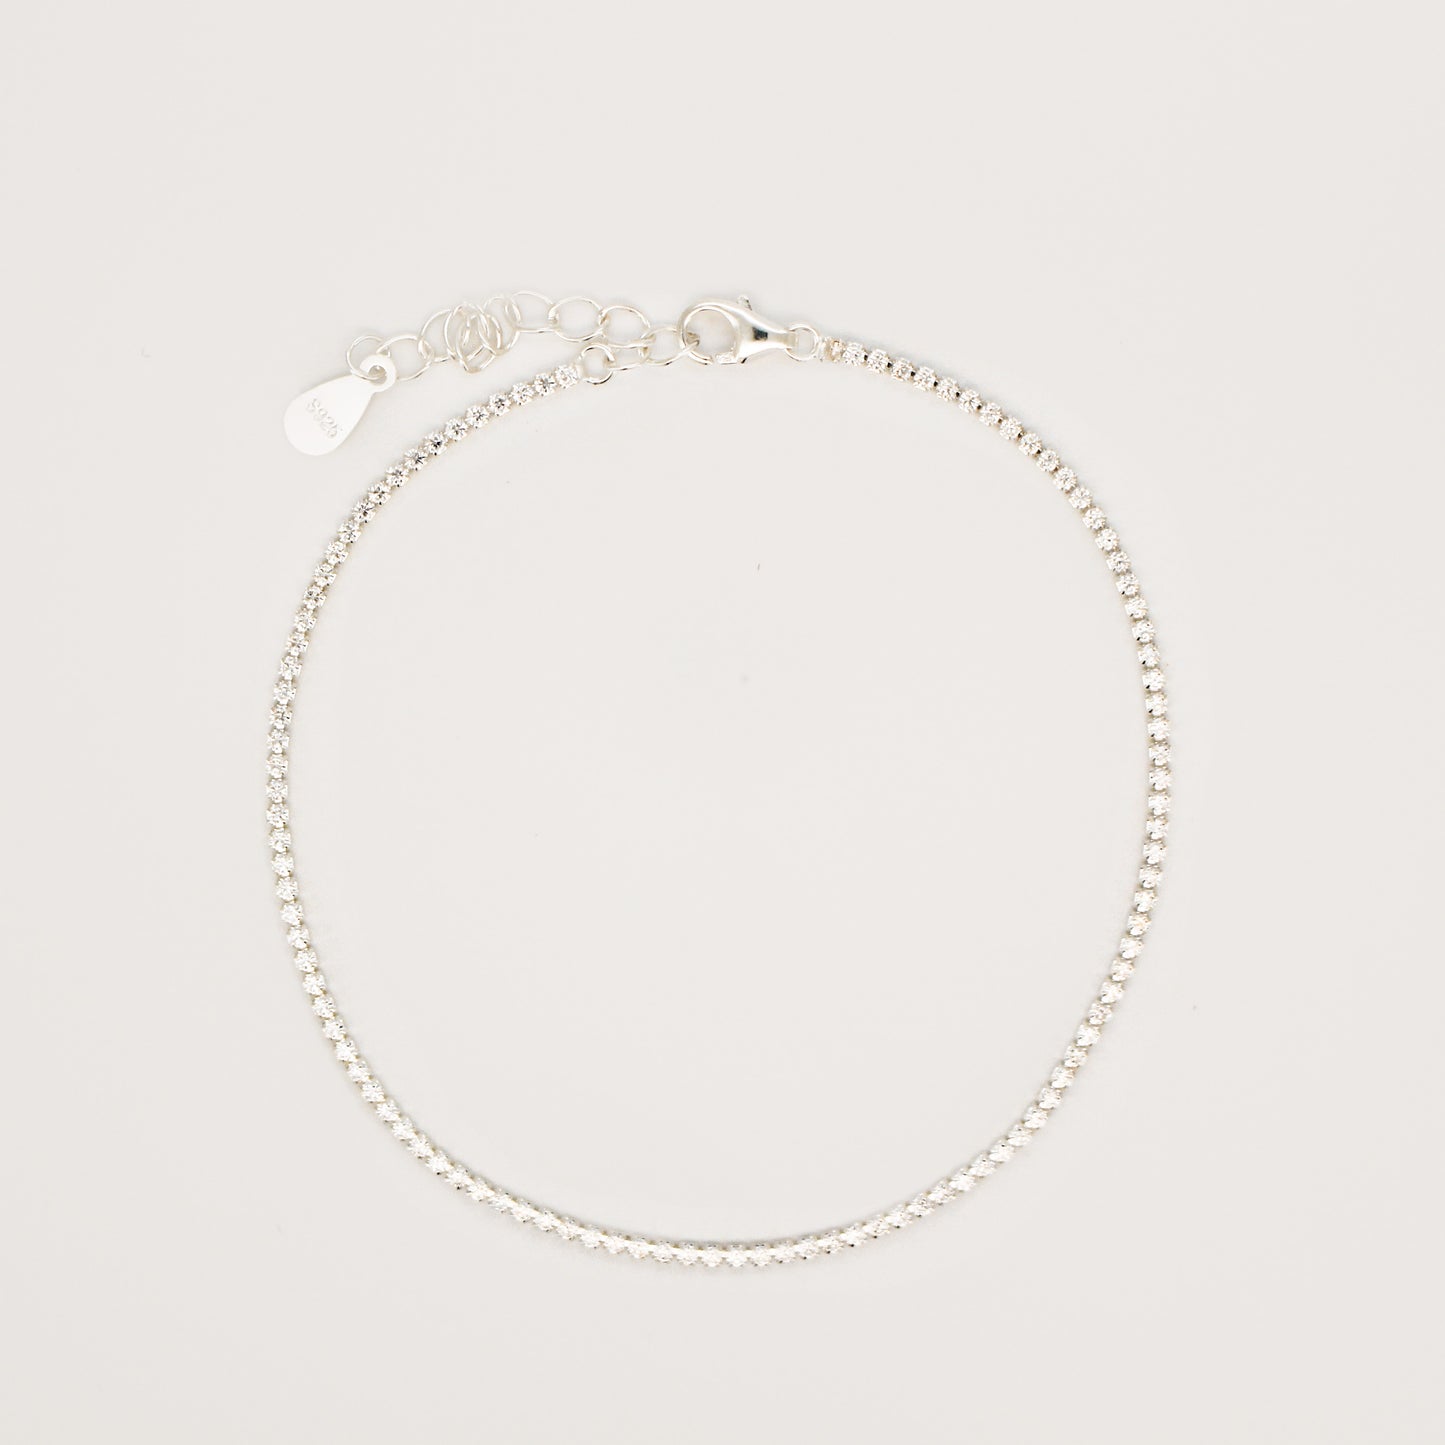 Luxurious Women's Bracelet in 925 Sterling Silver ∙ Row of Crystals ∙ Sparkling Tennis Bracelet ∙ Zircon Tennis Chain 1mm 2mm 3mm